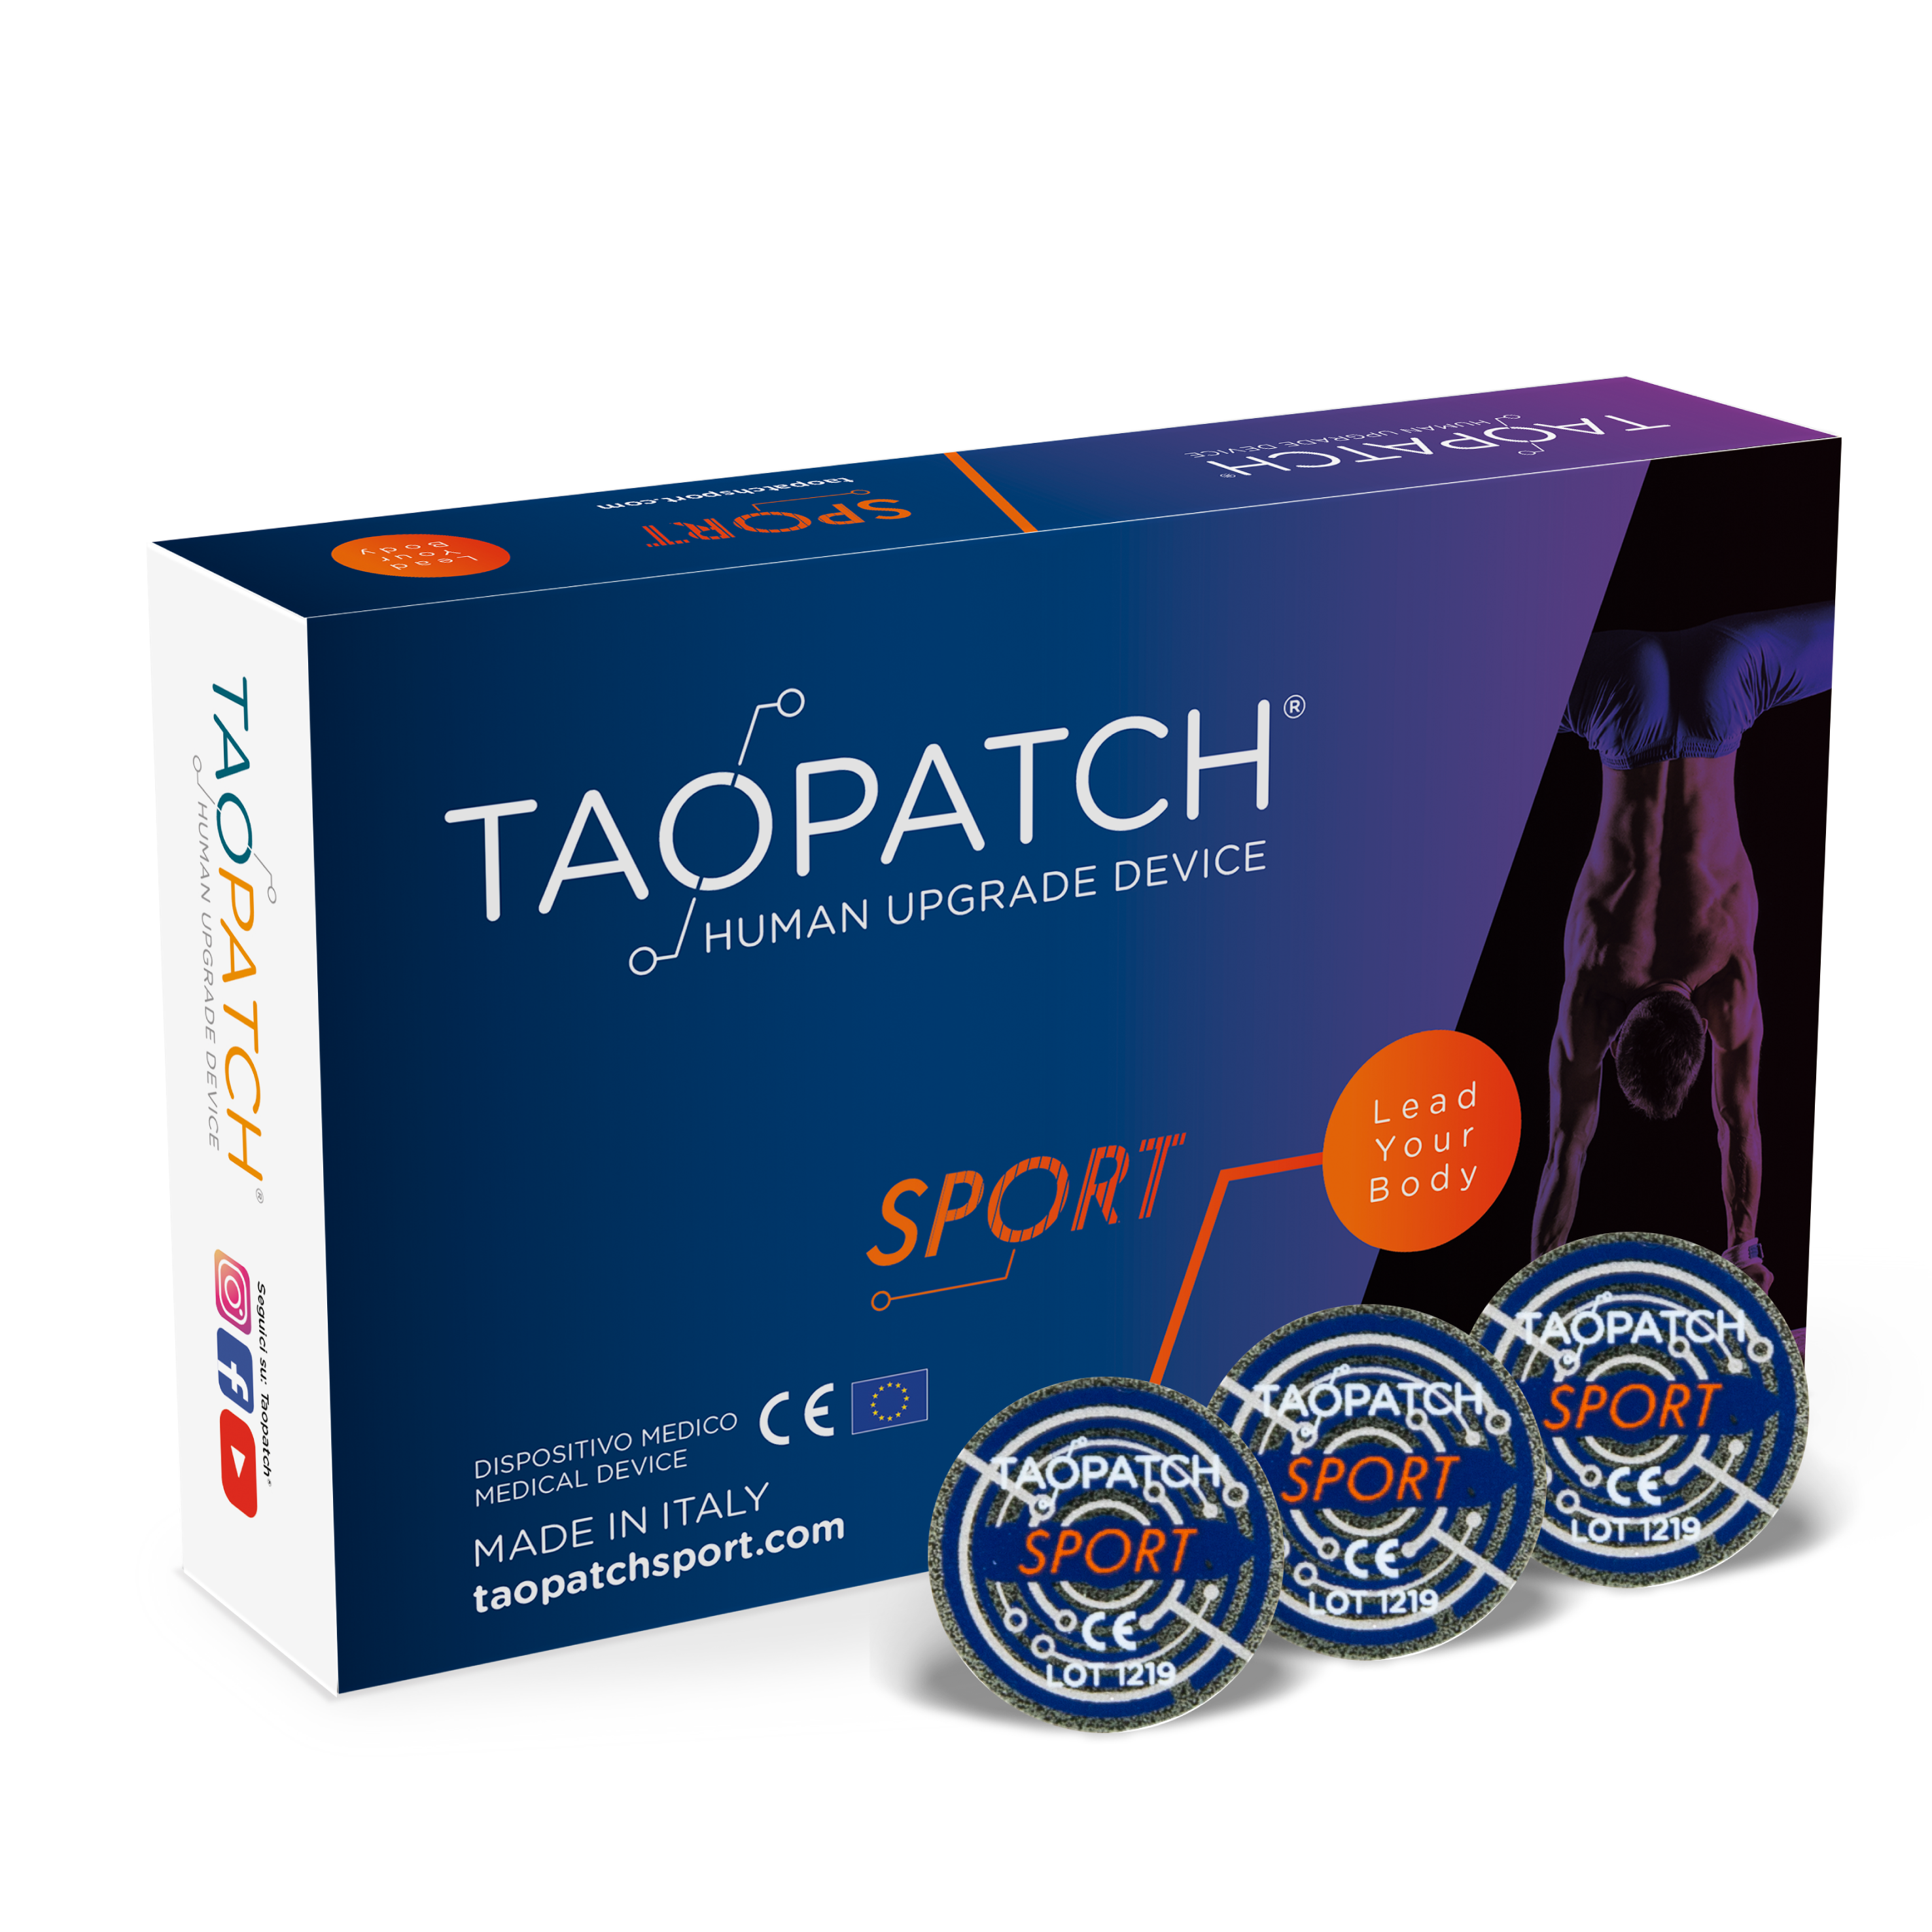 White Taopatch product box